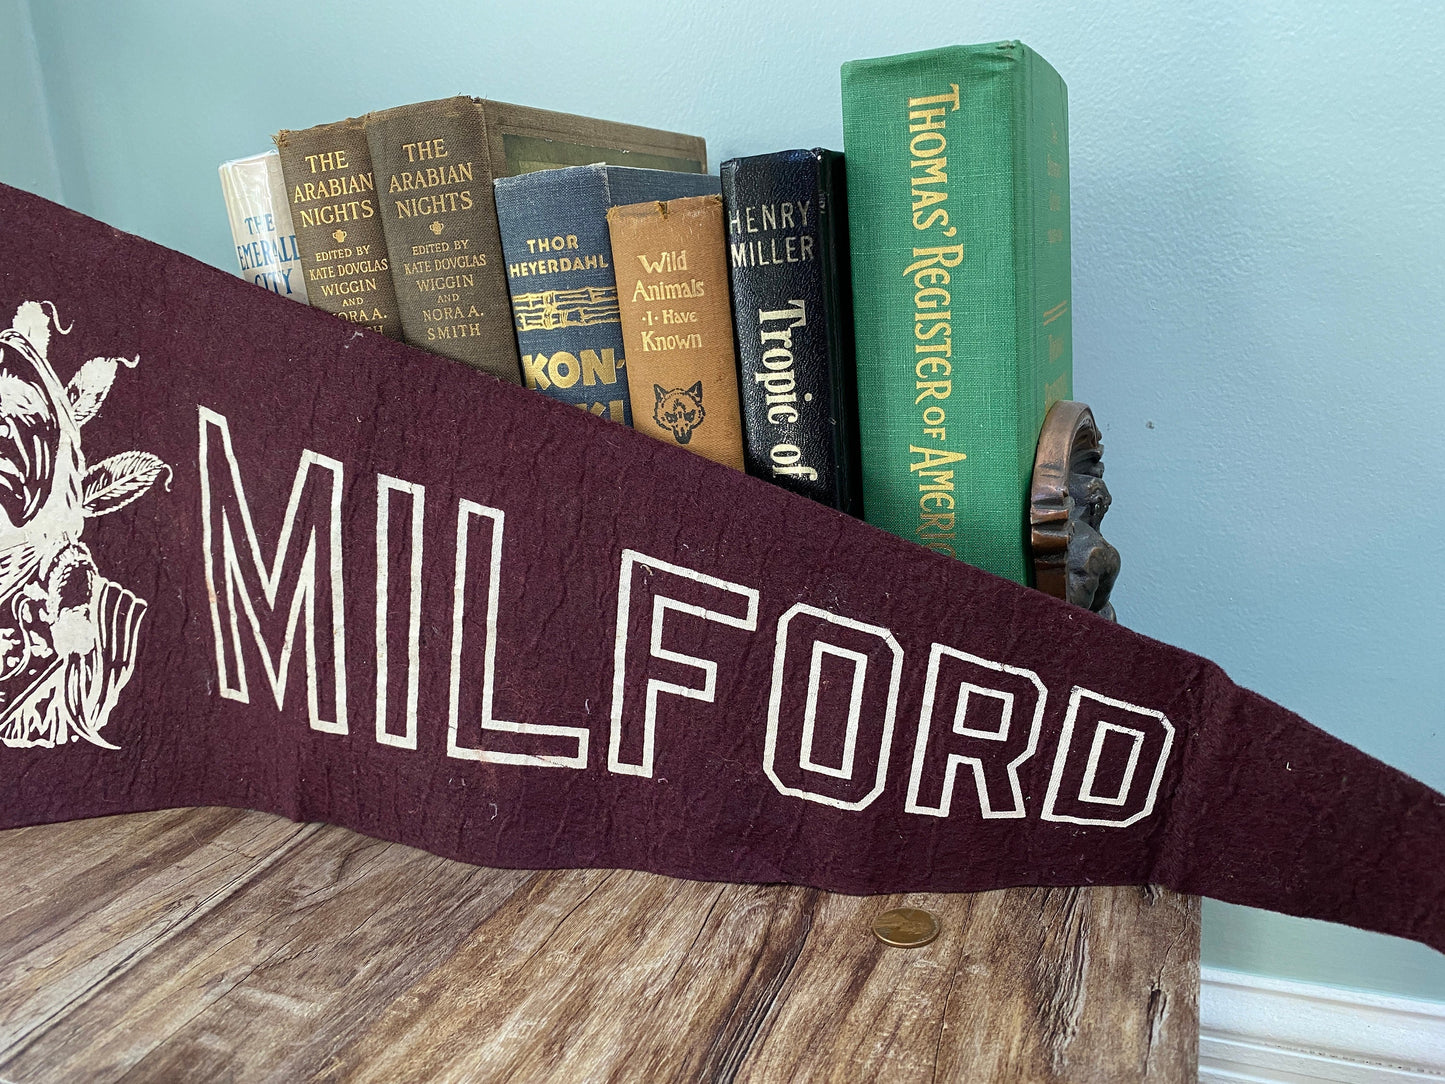 Vintage Milford Connecticut Pennant